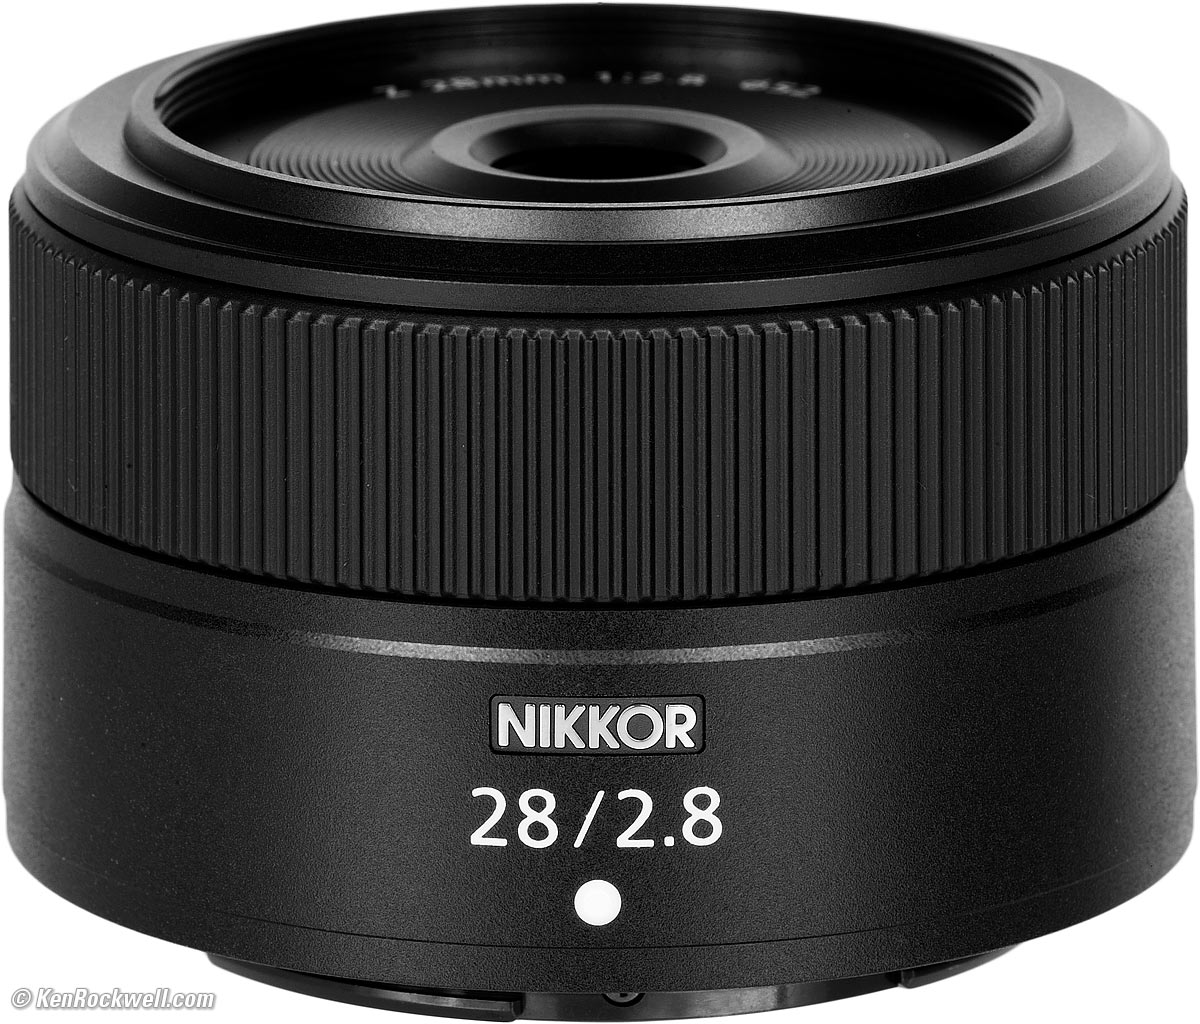 nikon zoom lens for 200 yards